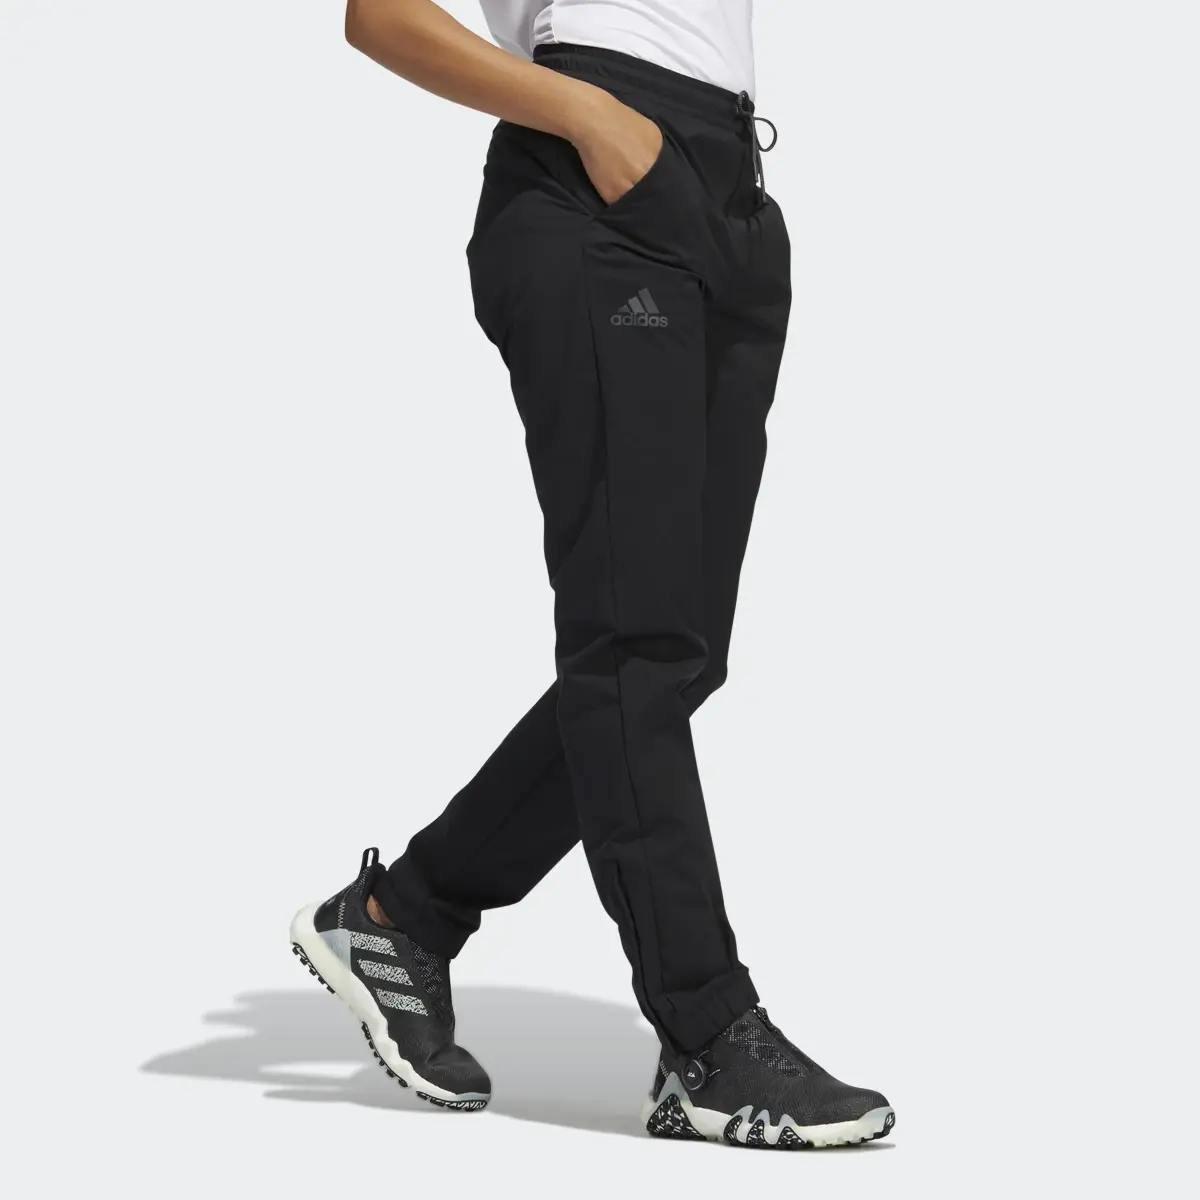 Adidas Provisional Golf Pants. 3